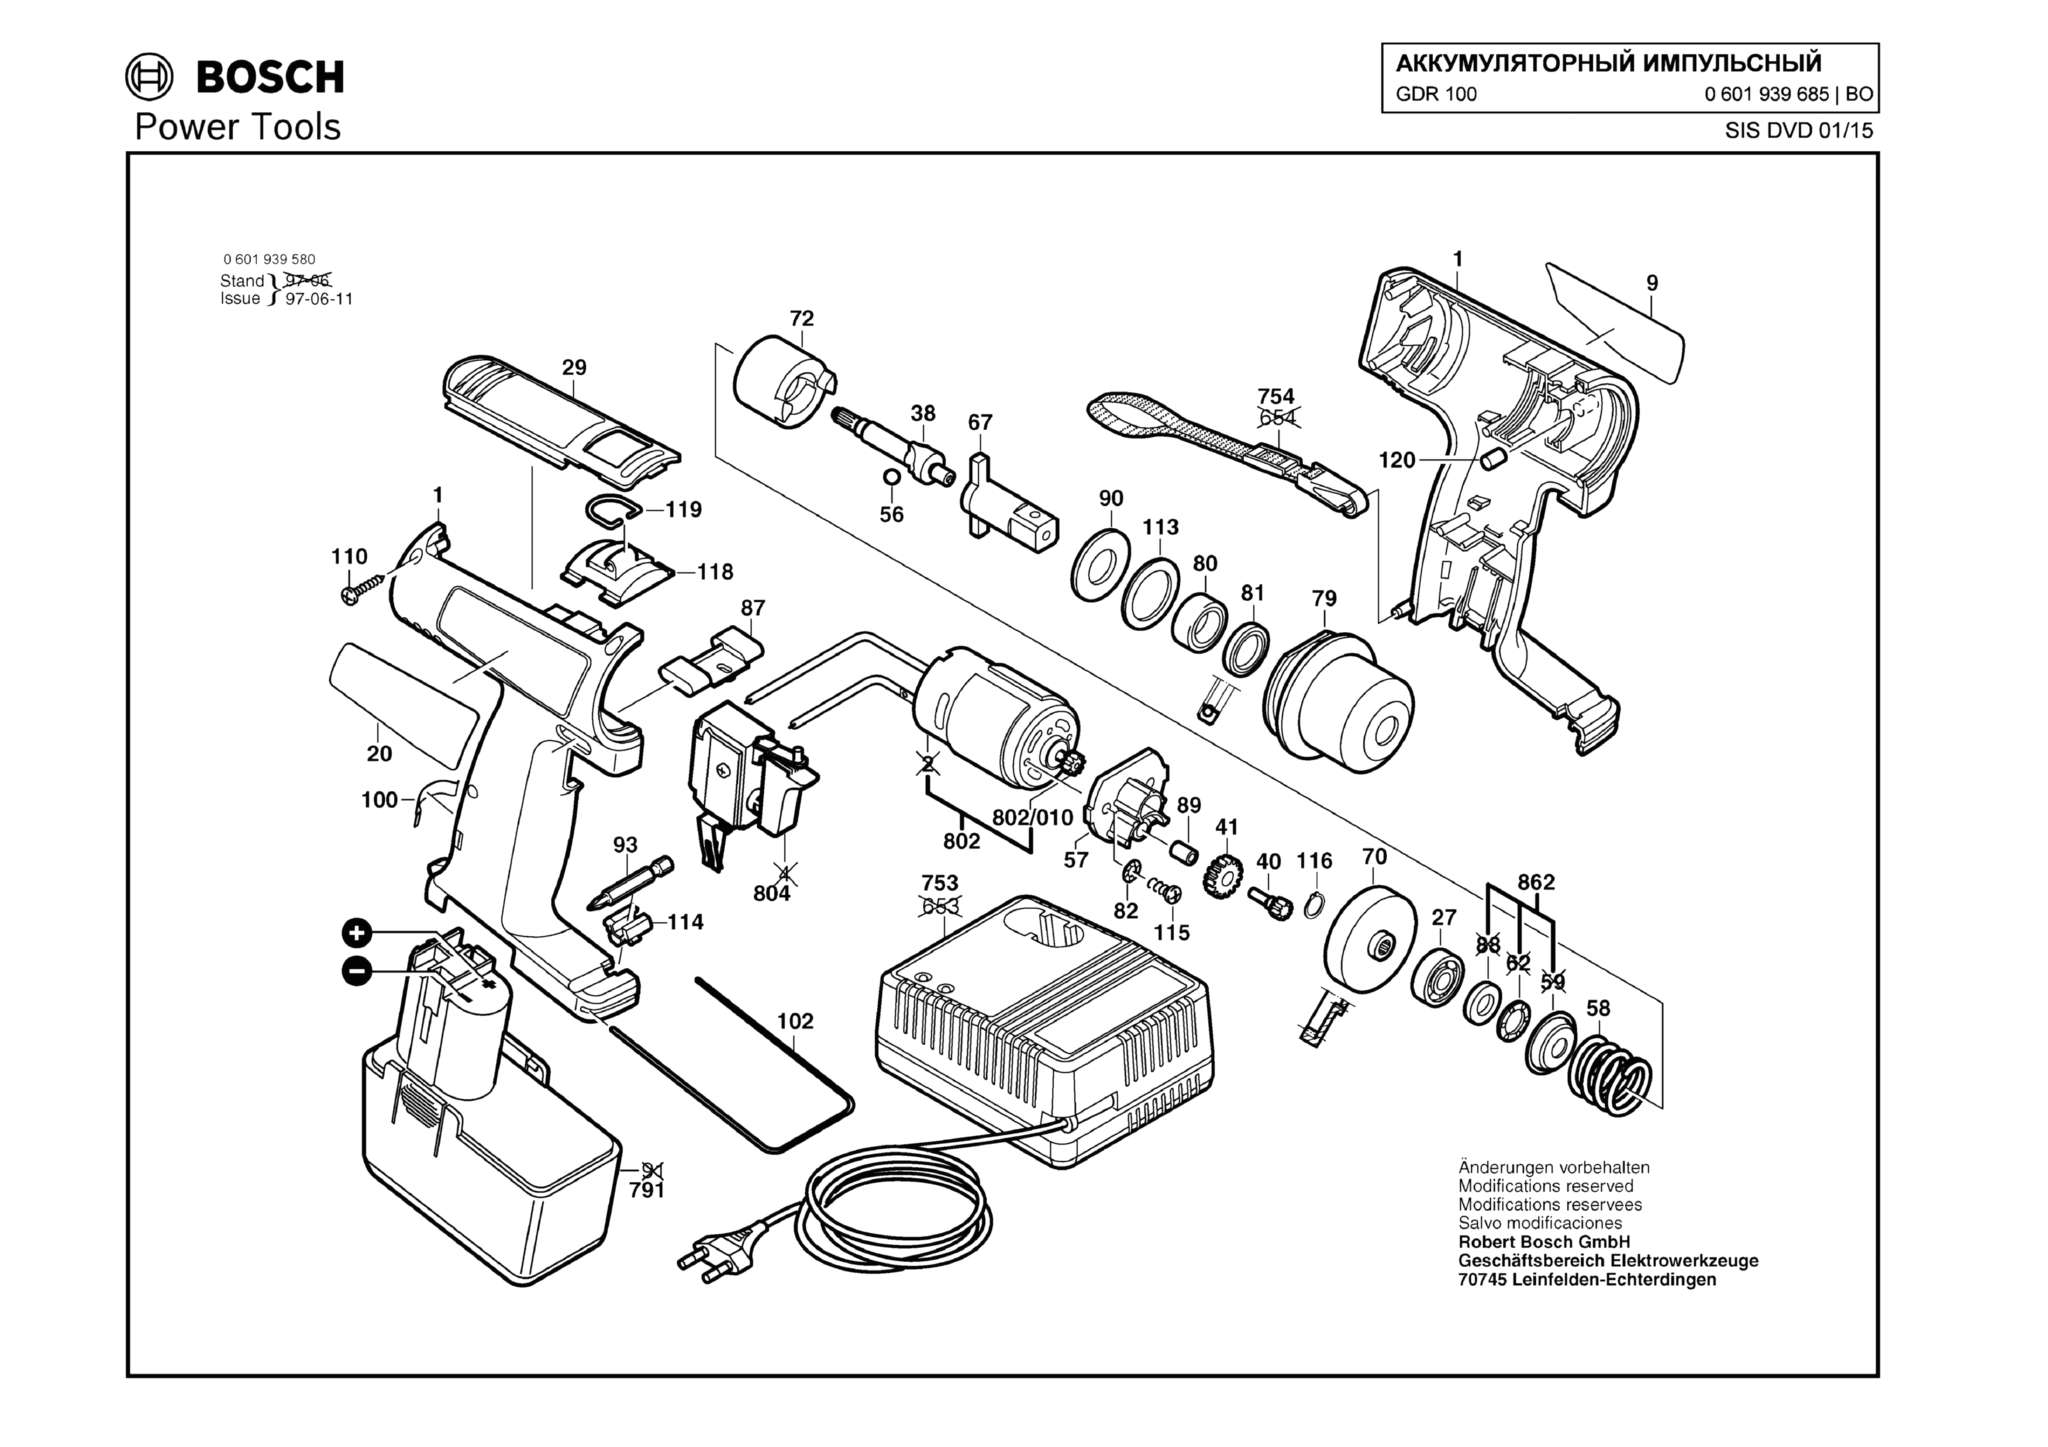 Запчасти, схема и деталировка Bosch GDR 100 (ТИП 0601939685)